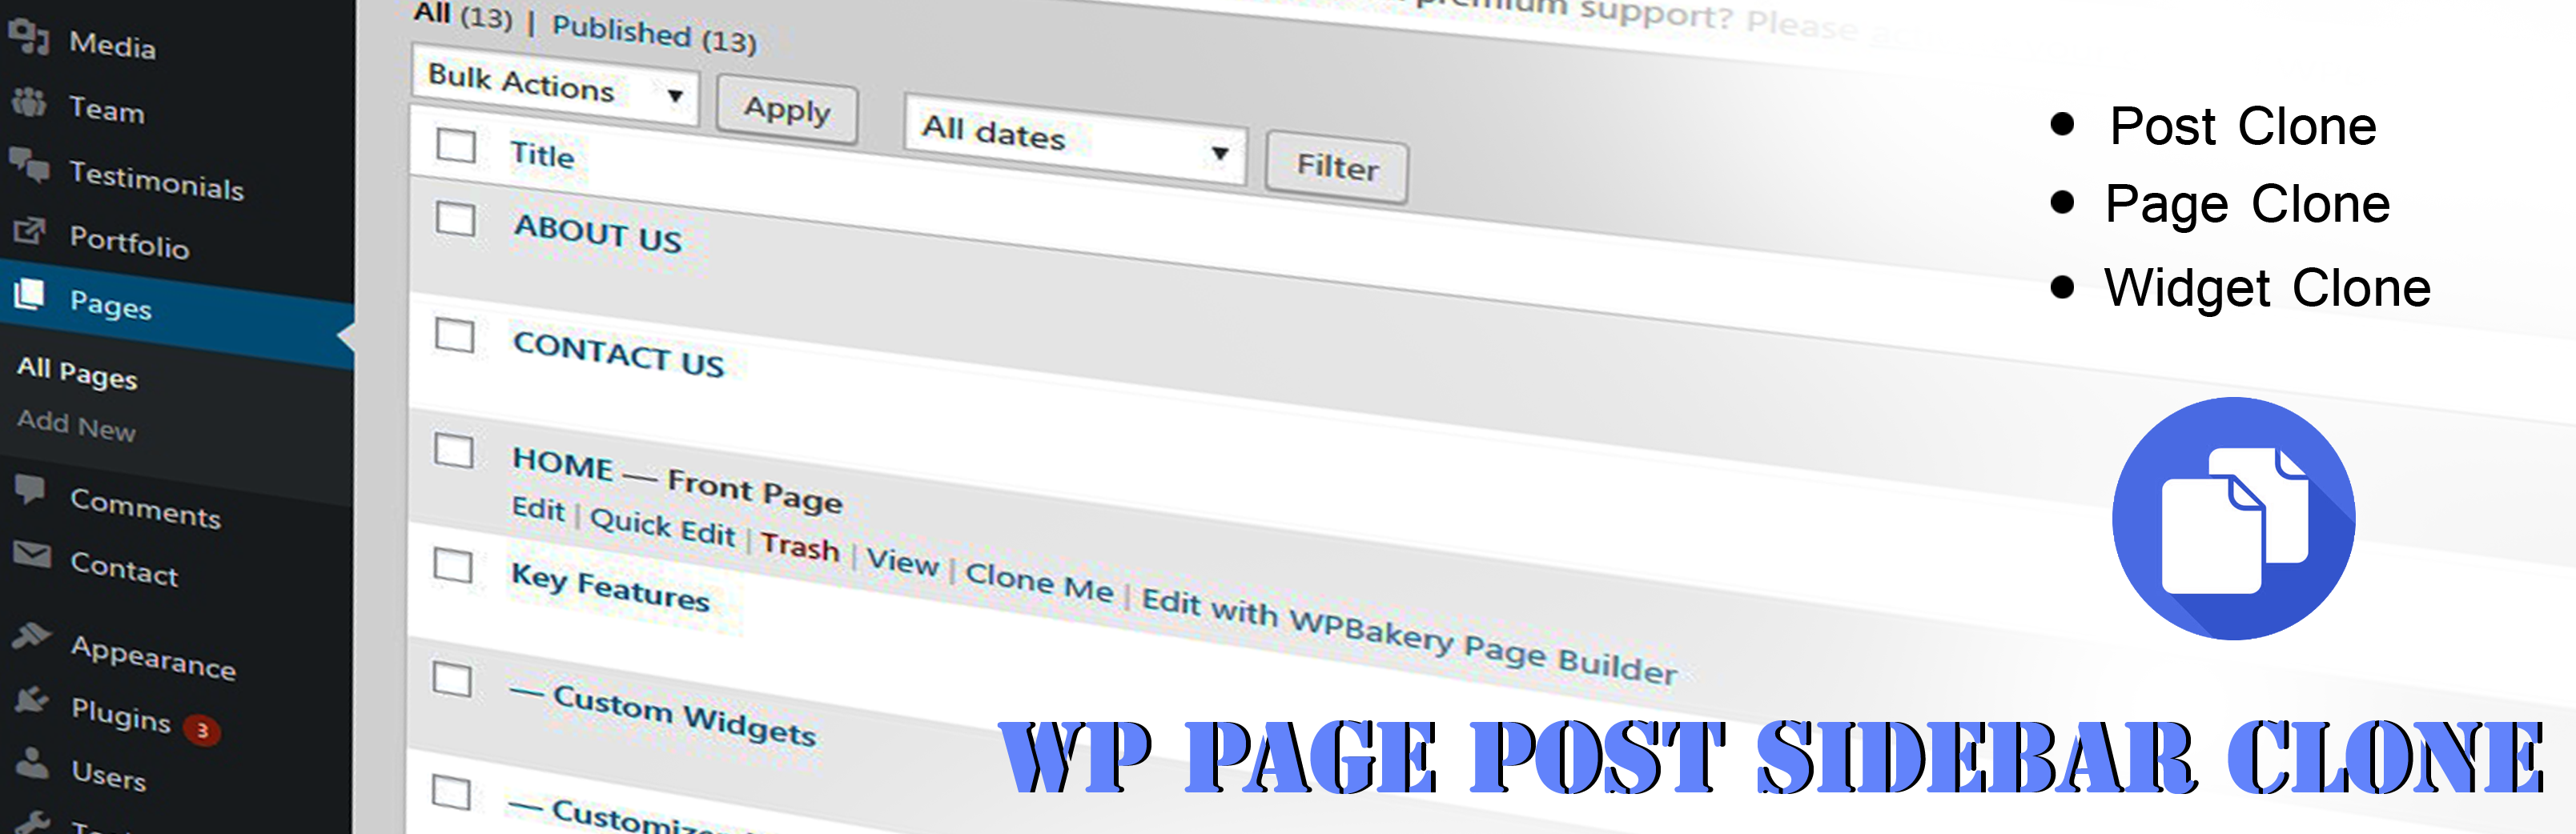 WP Page Post Widget Clone Preview Wordpress Plugin - Rating, Reviews, Demo & Download